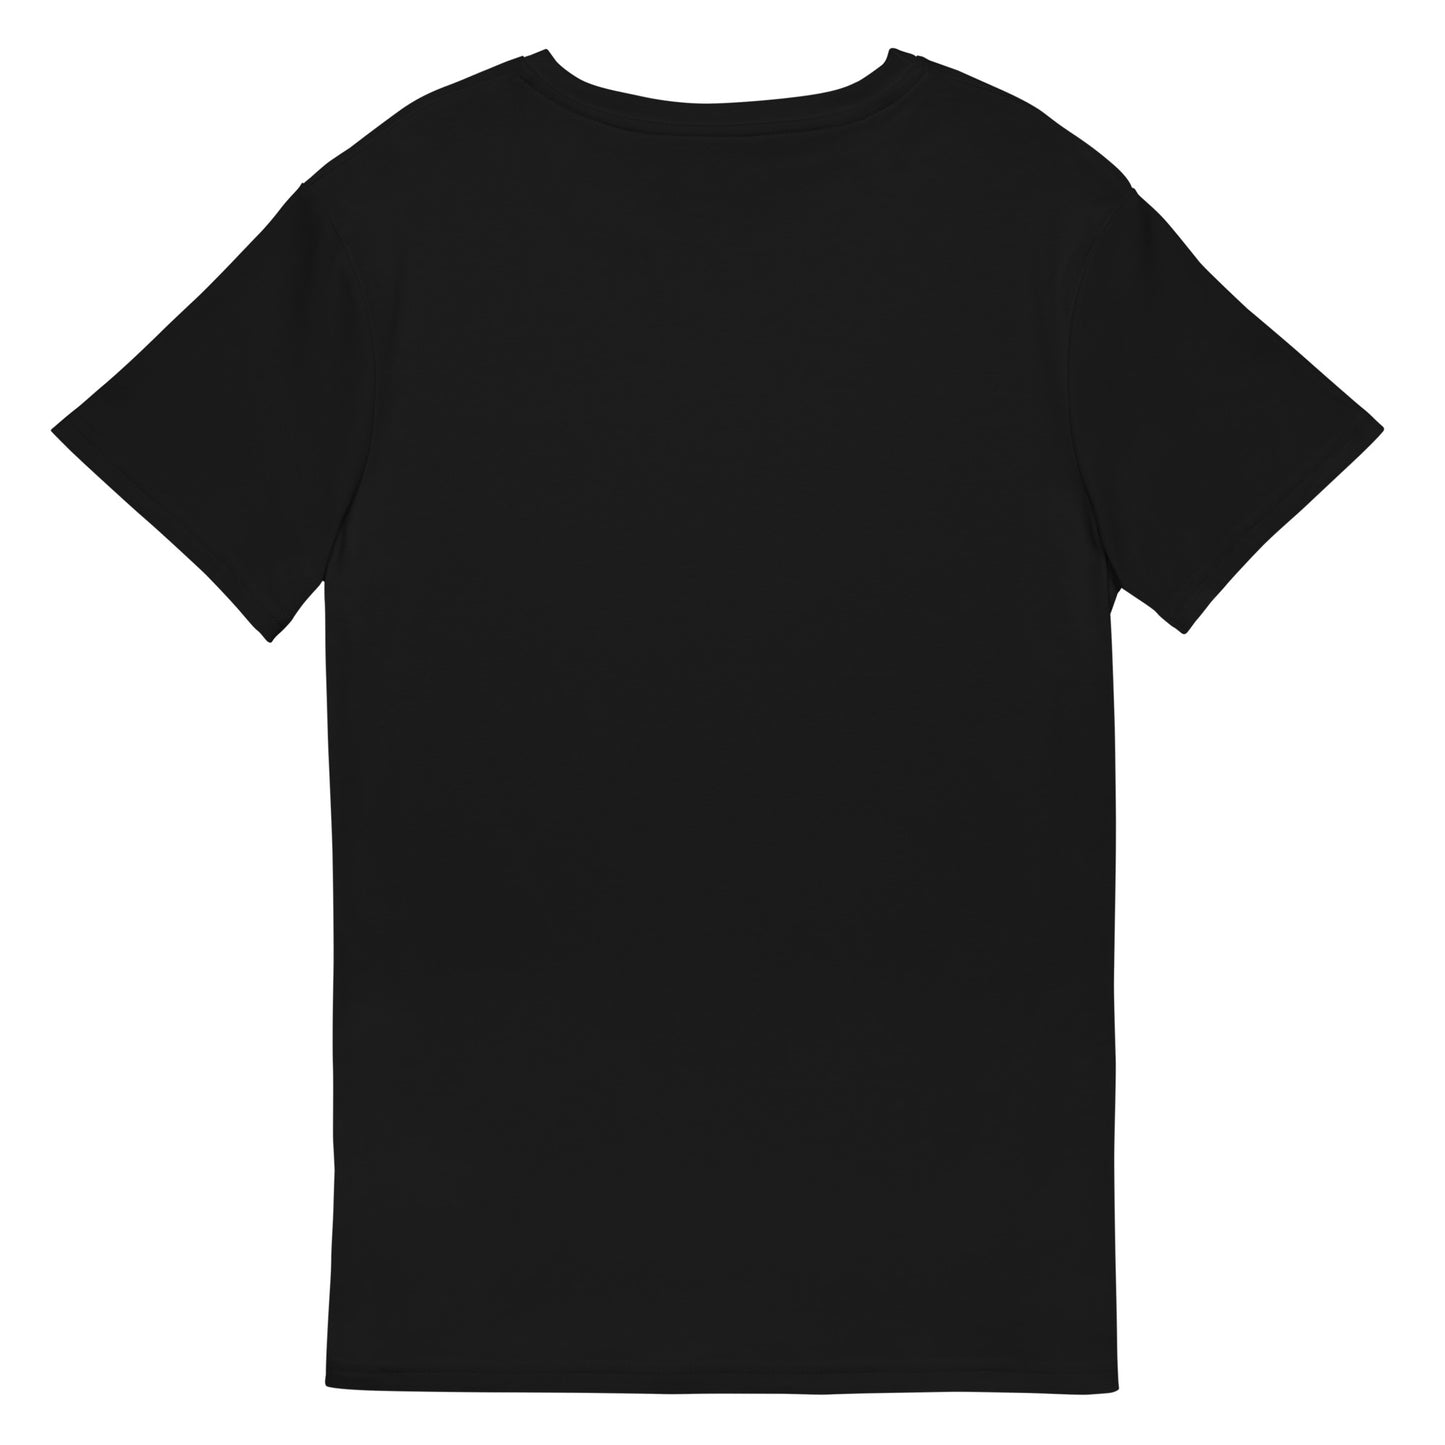 Gymbum UK Men's G premium cotton t-shirt